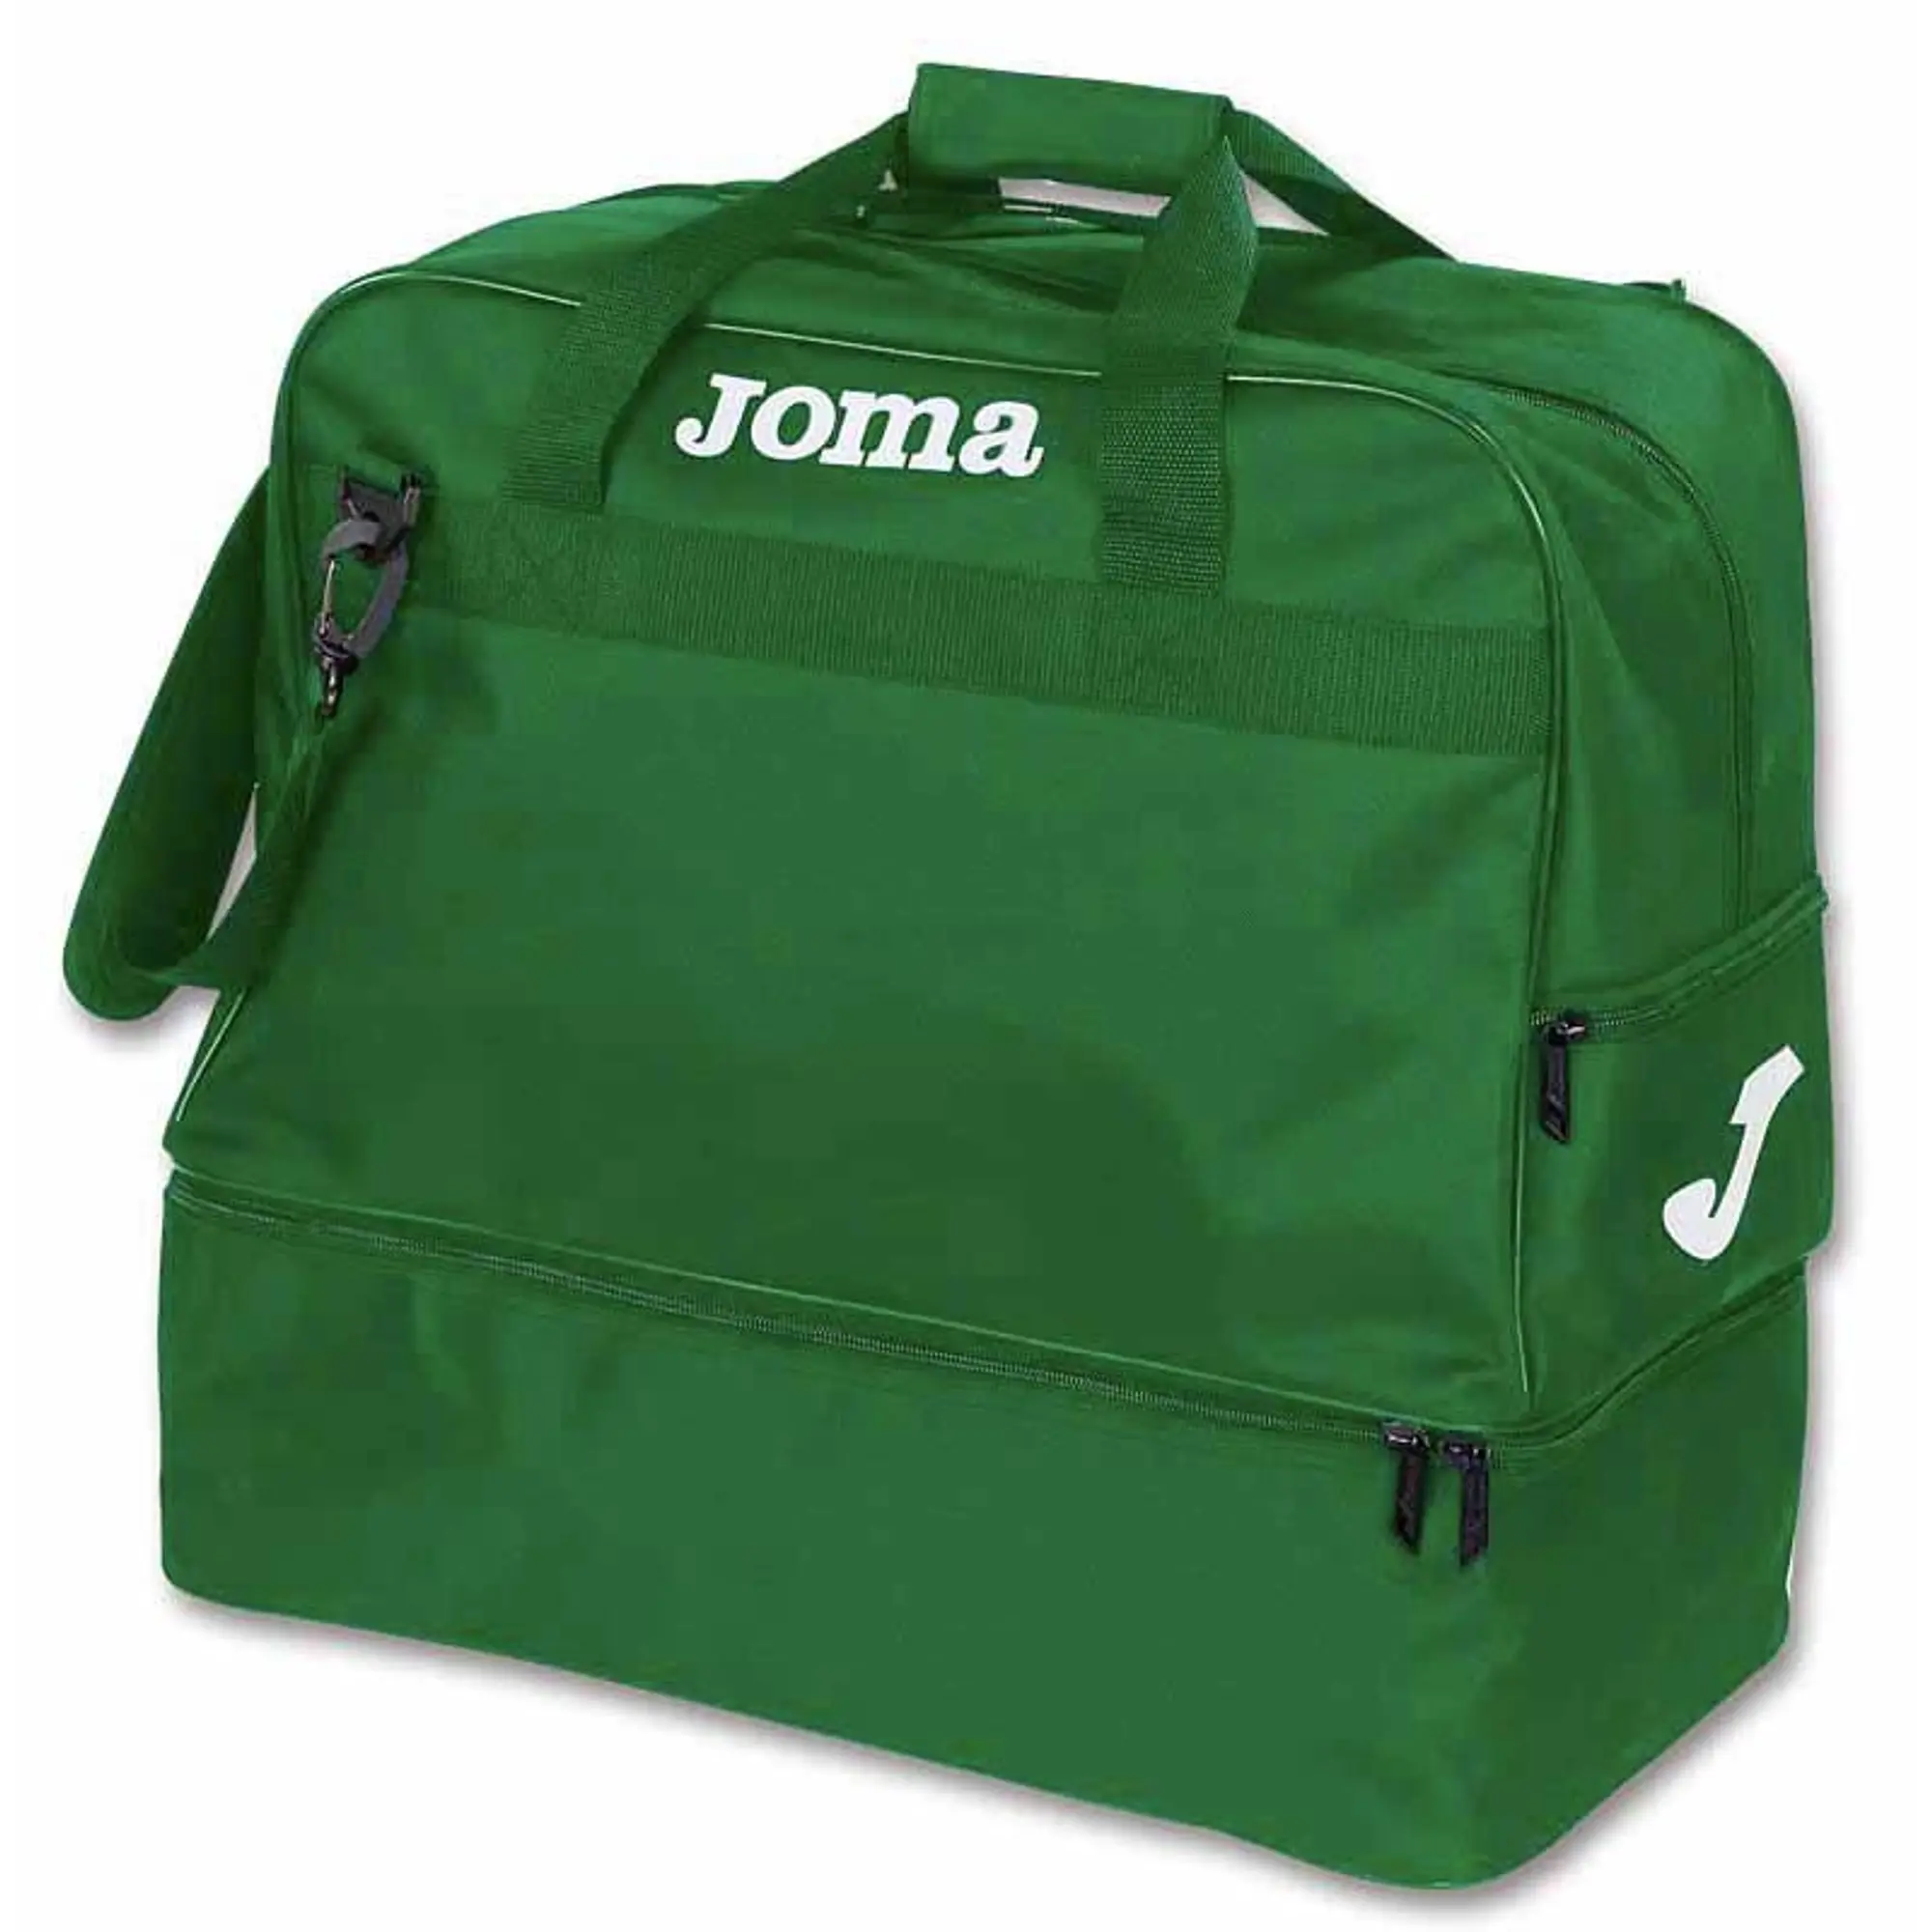 Joma Training Iii L Bag  - Green